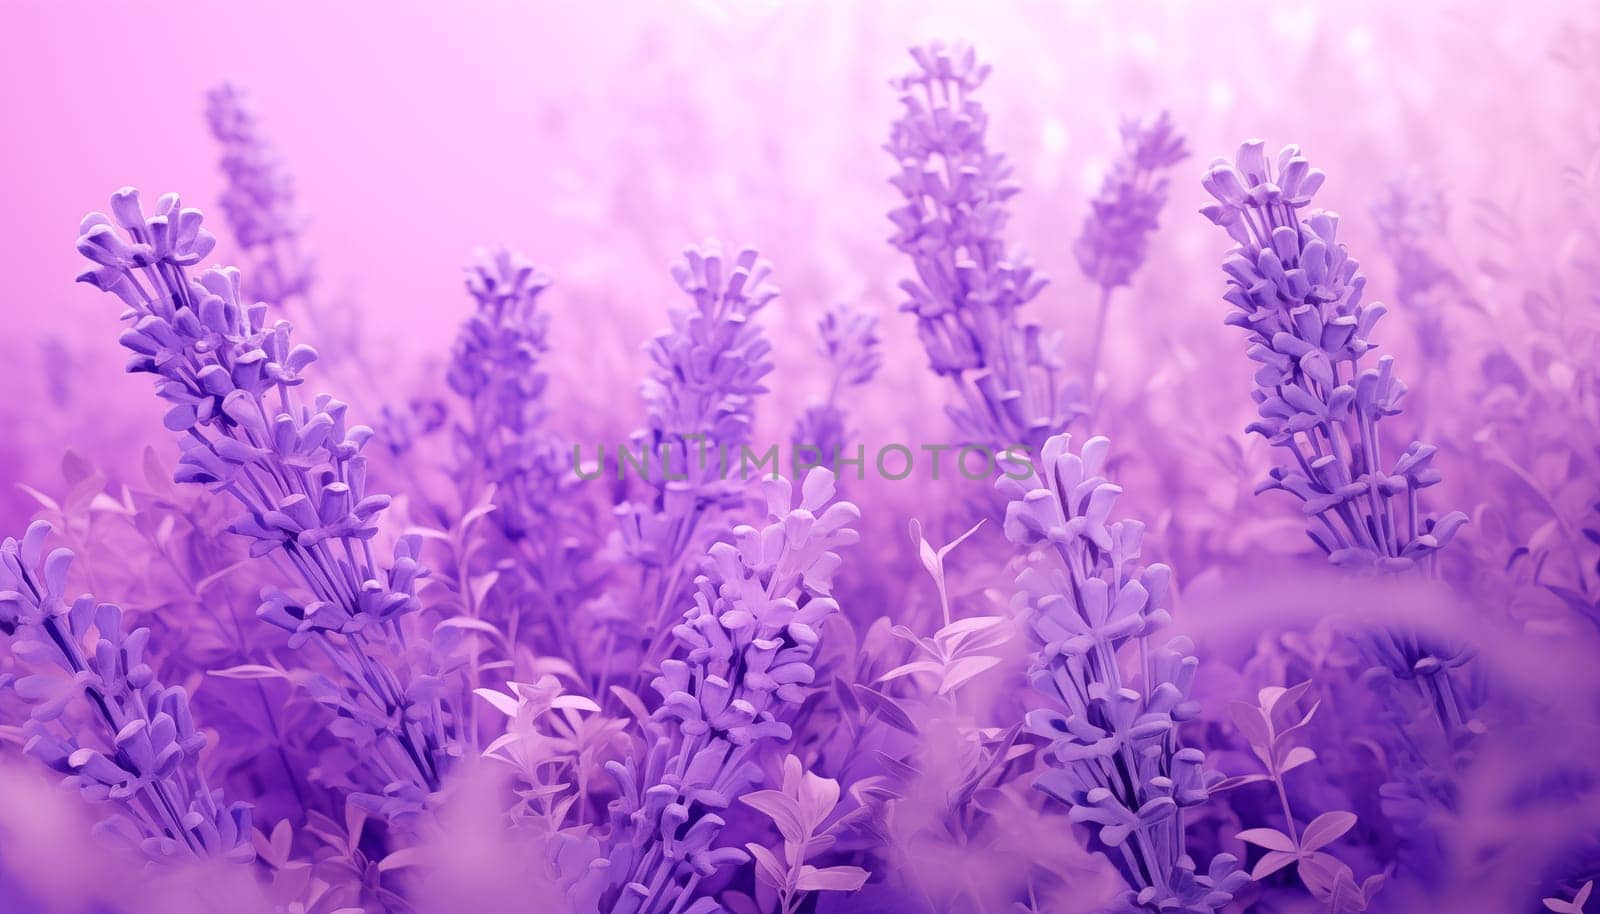 Lavender background. High quality illustration